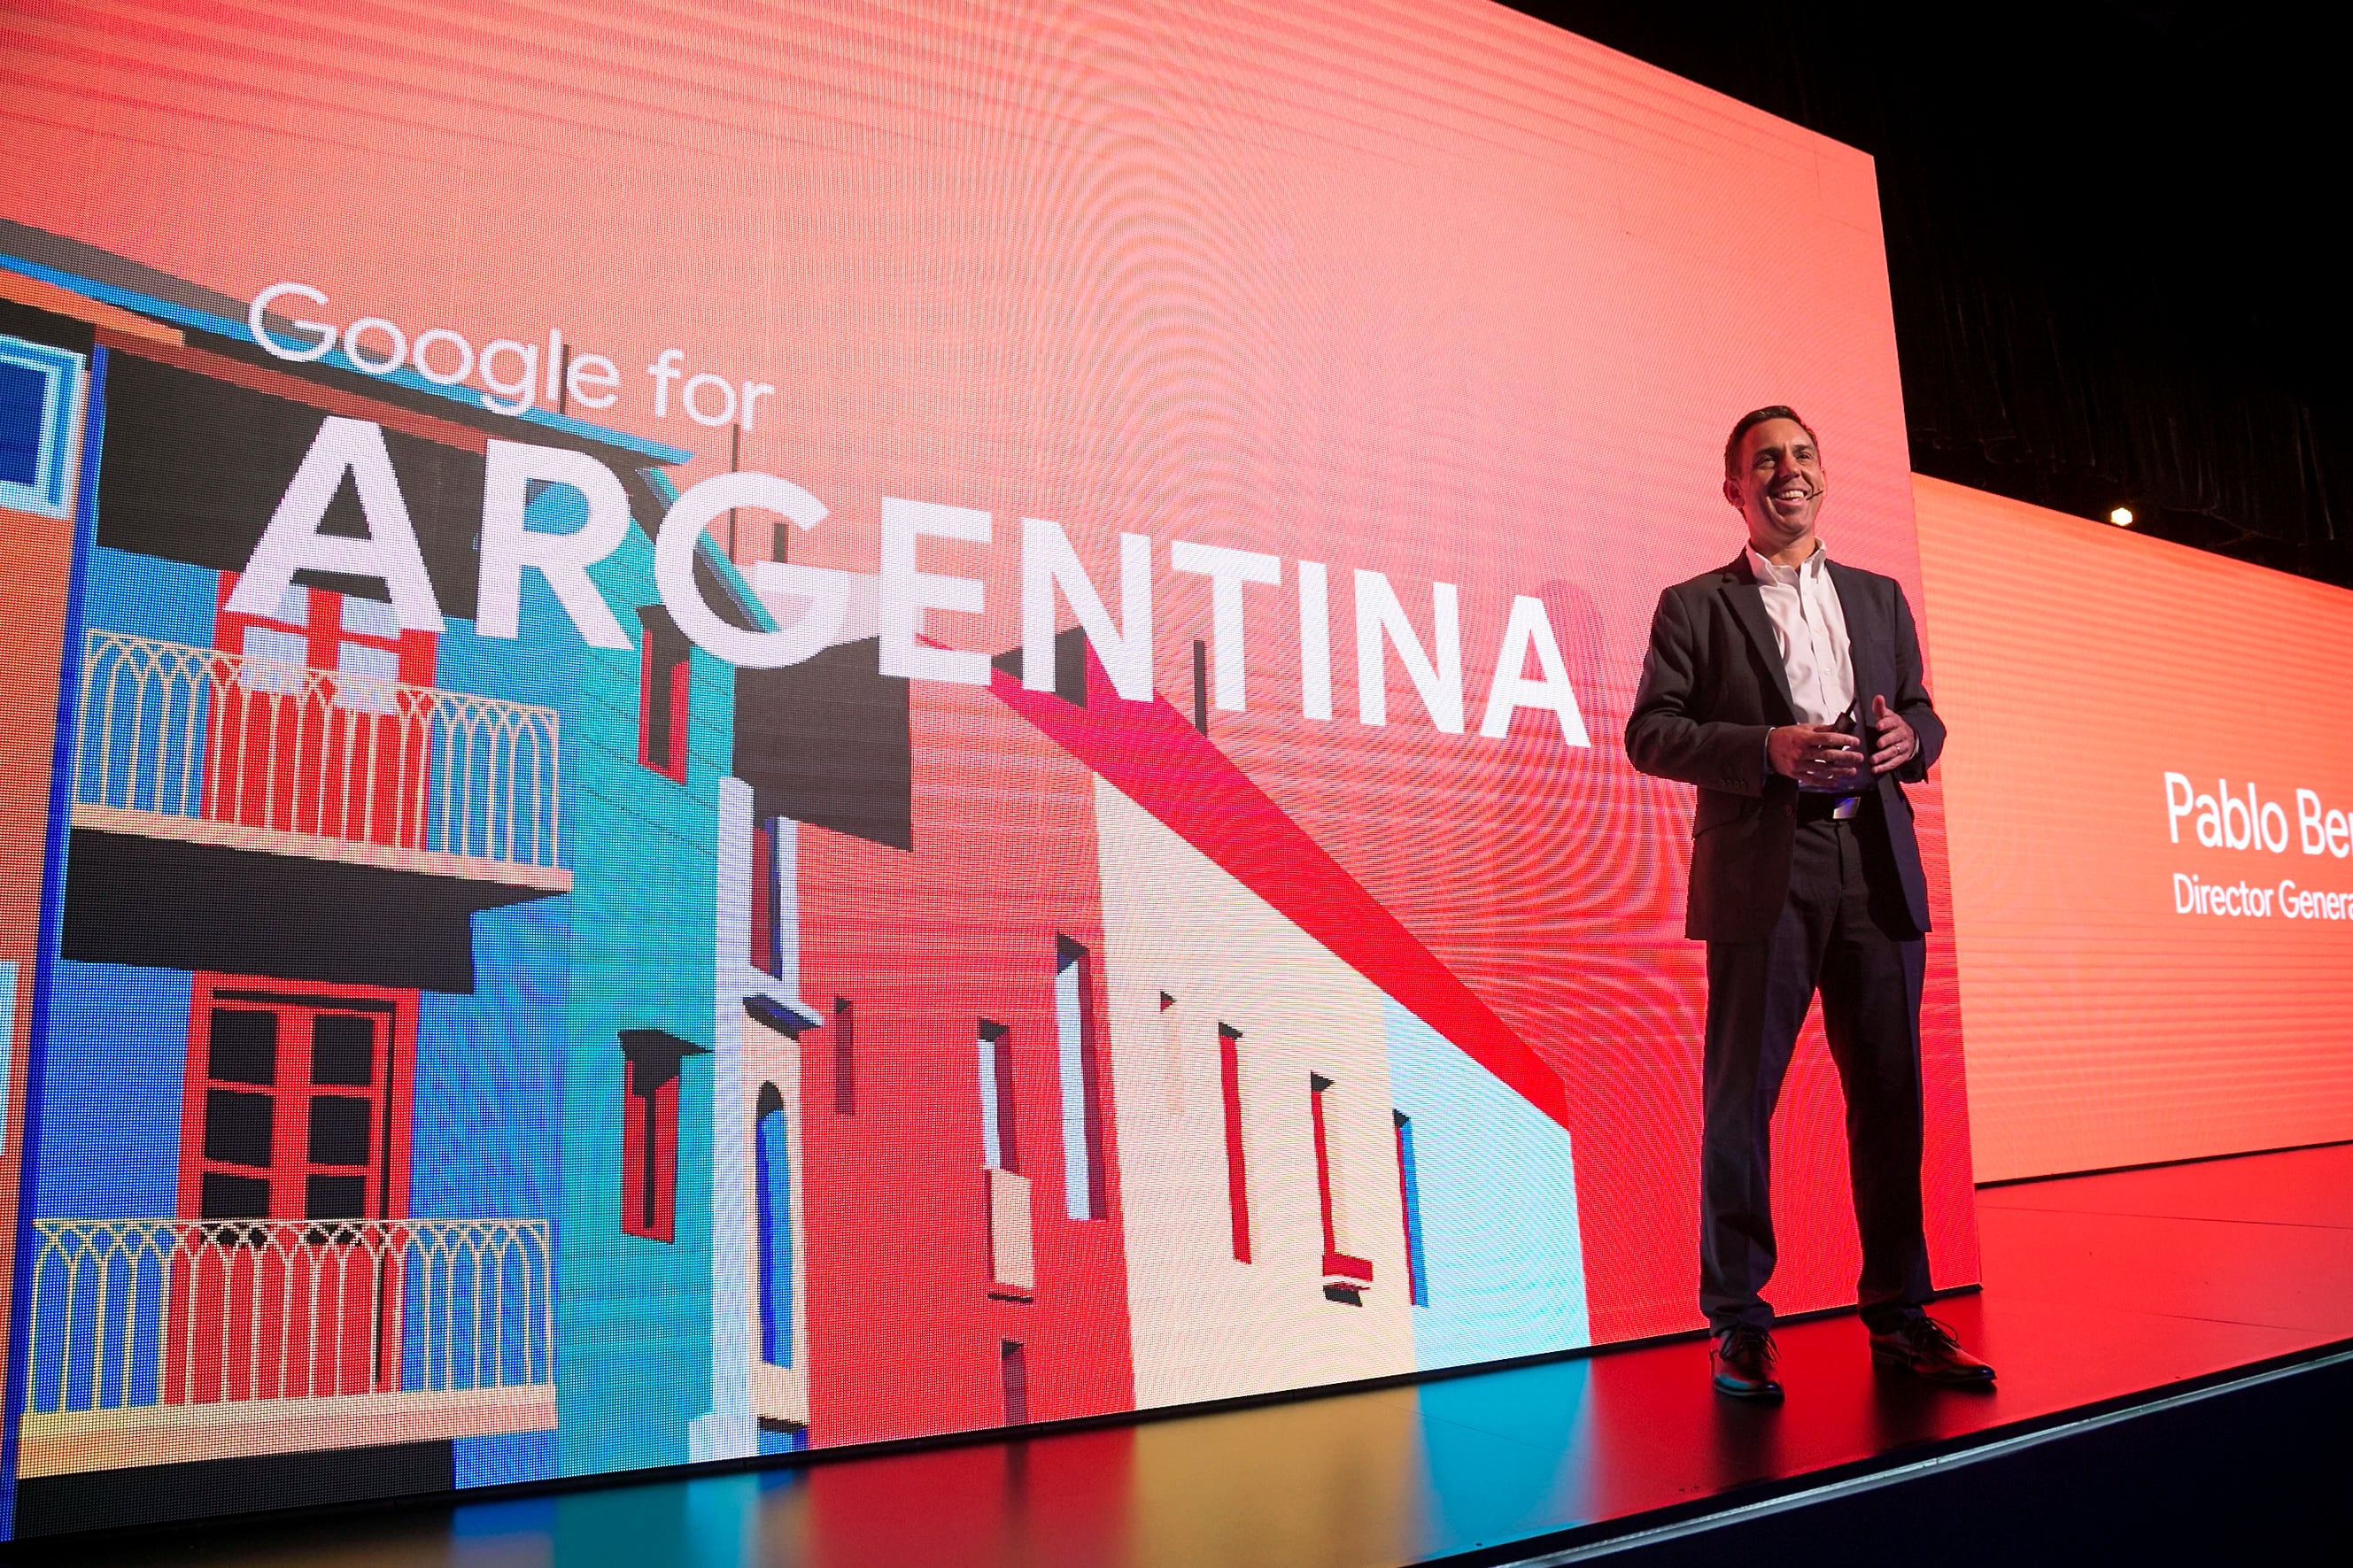  Pablo Beramendi, director General de Google Argentina.